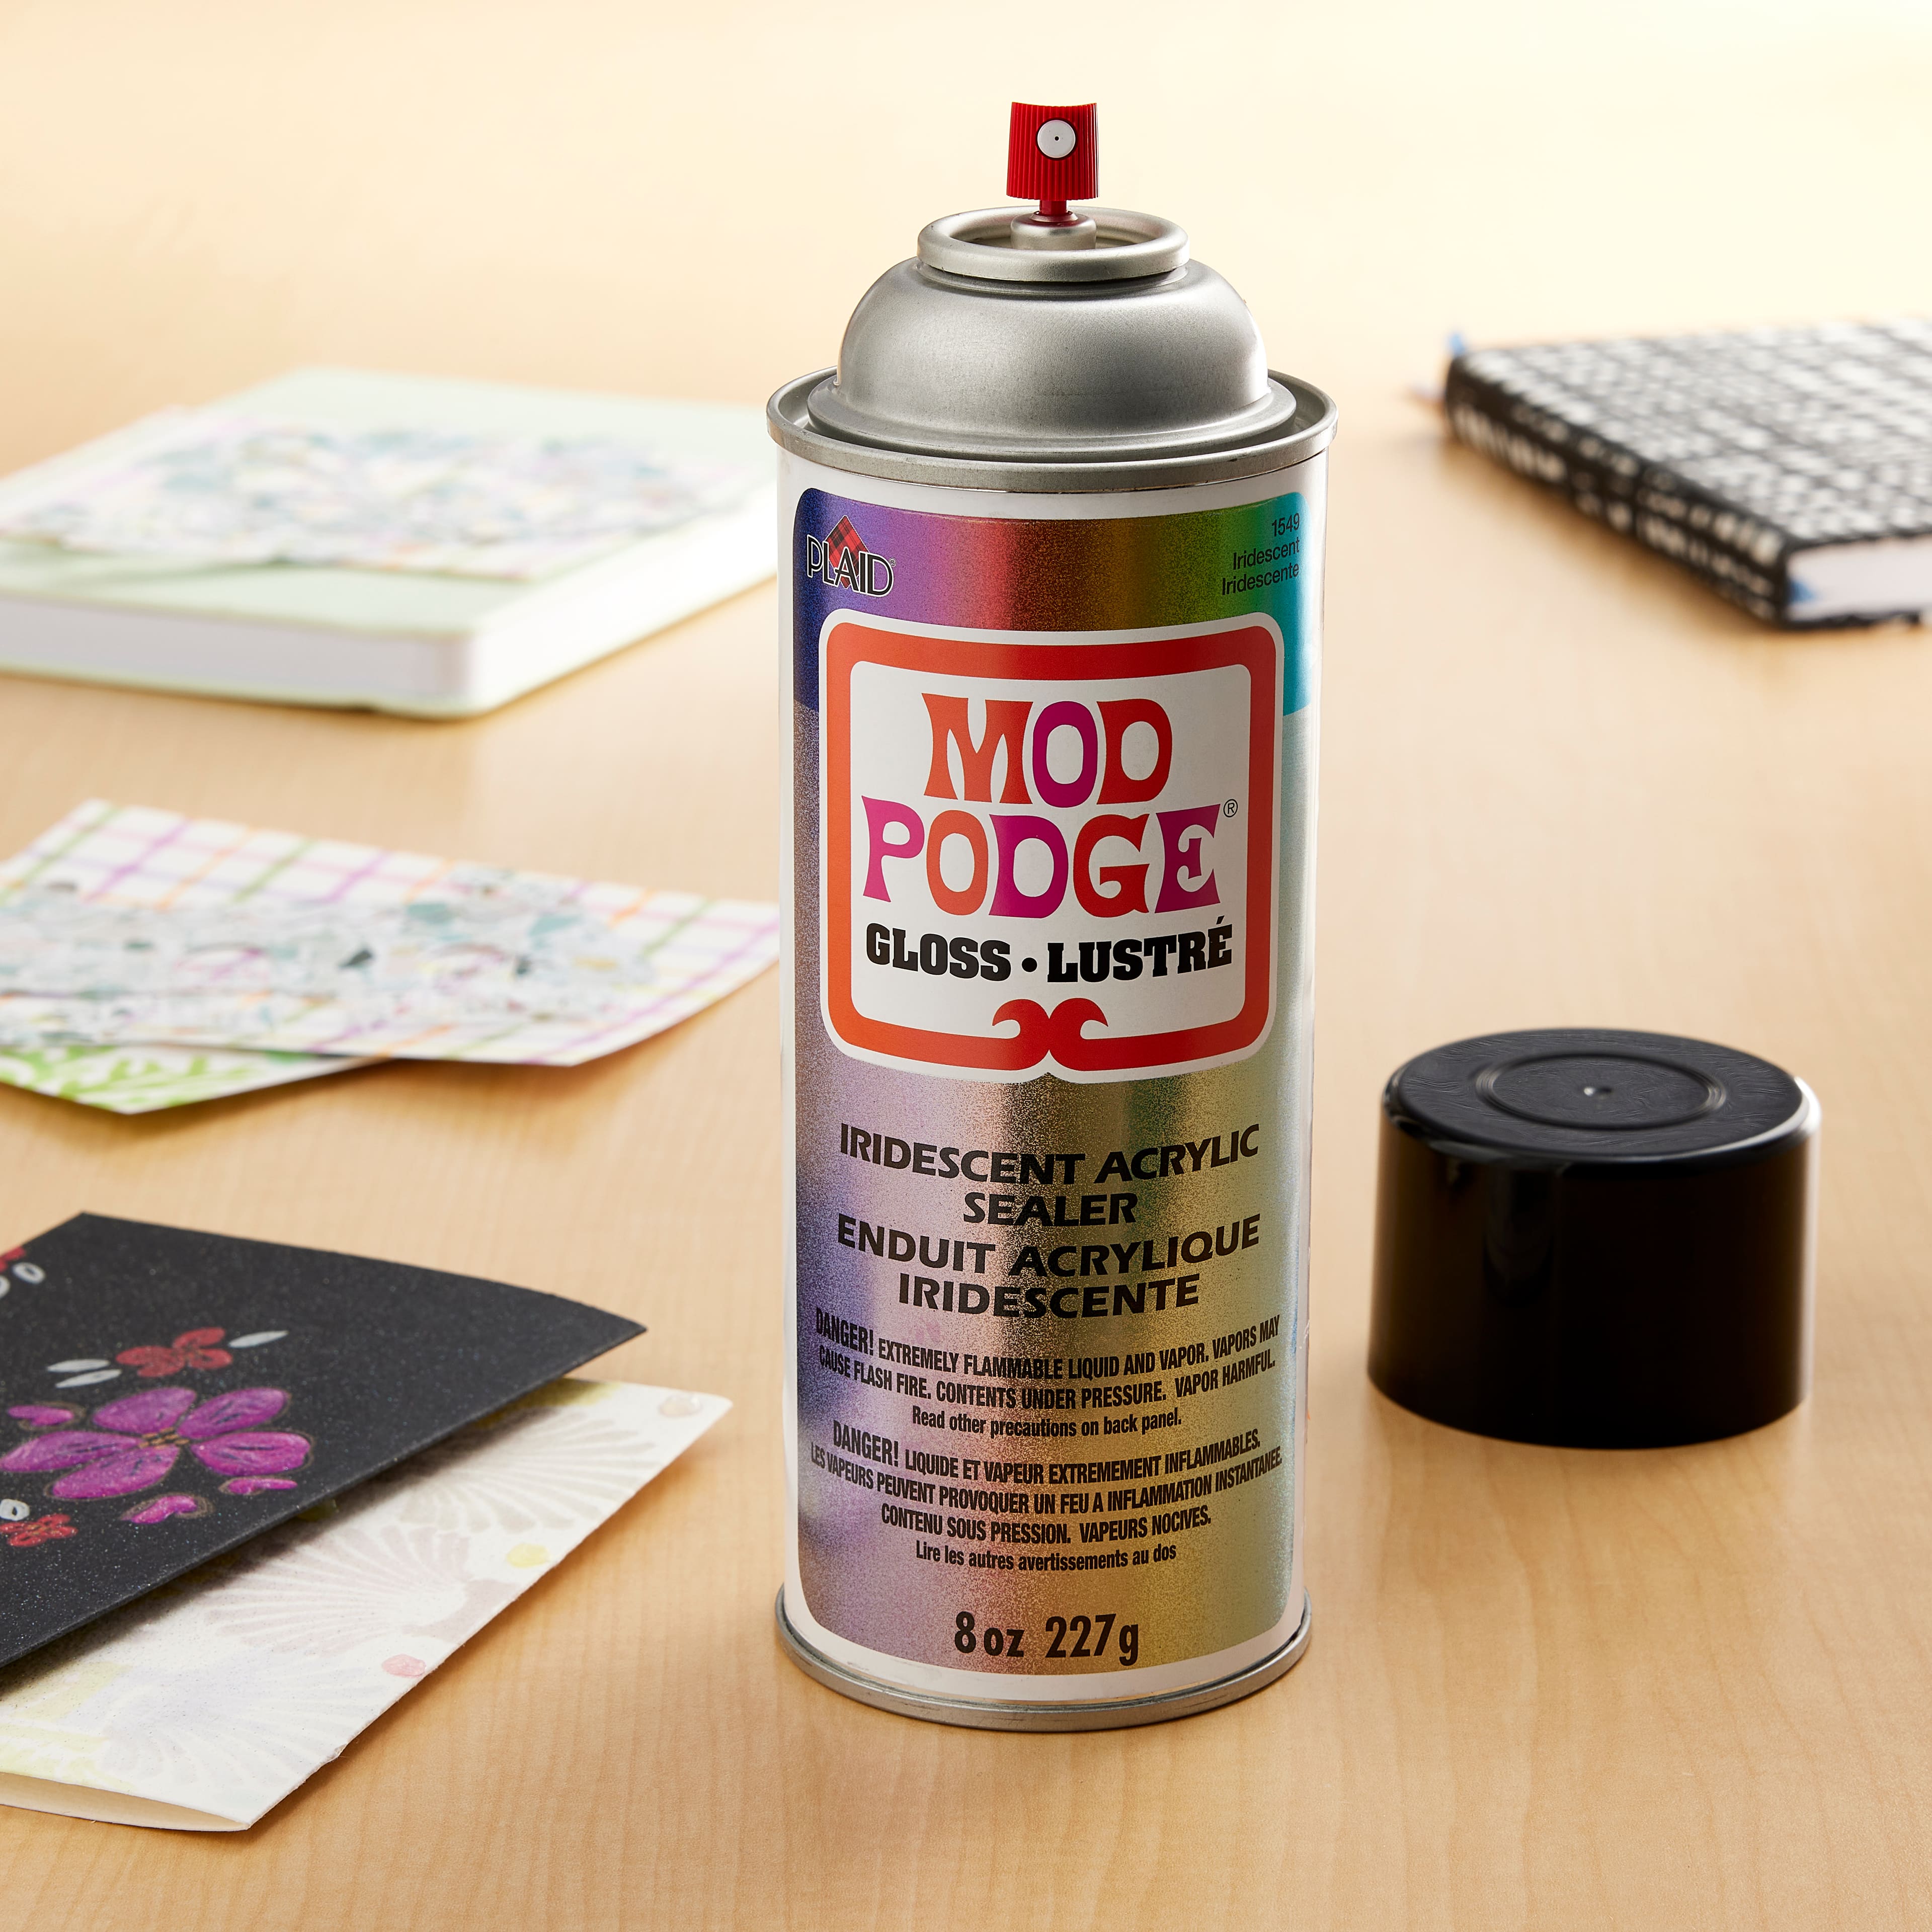 Mod Podge® Gloss Iridescent Acrylic Sealer